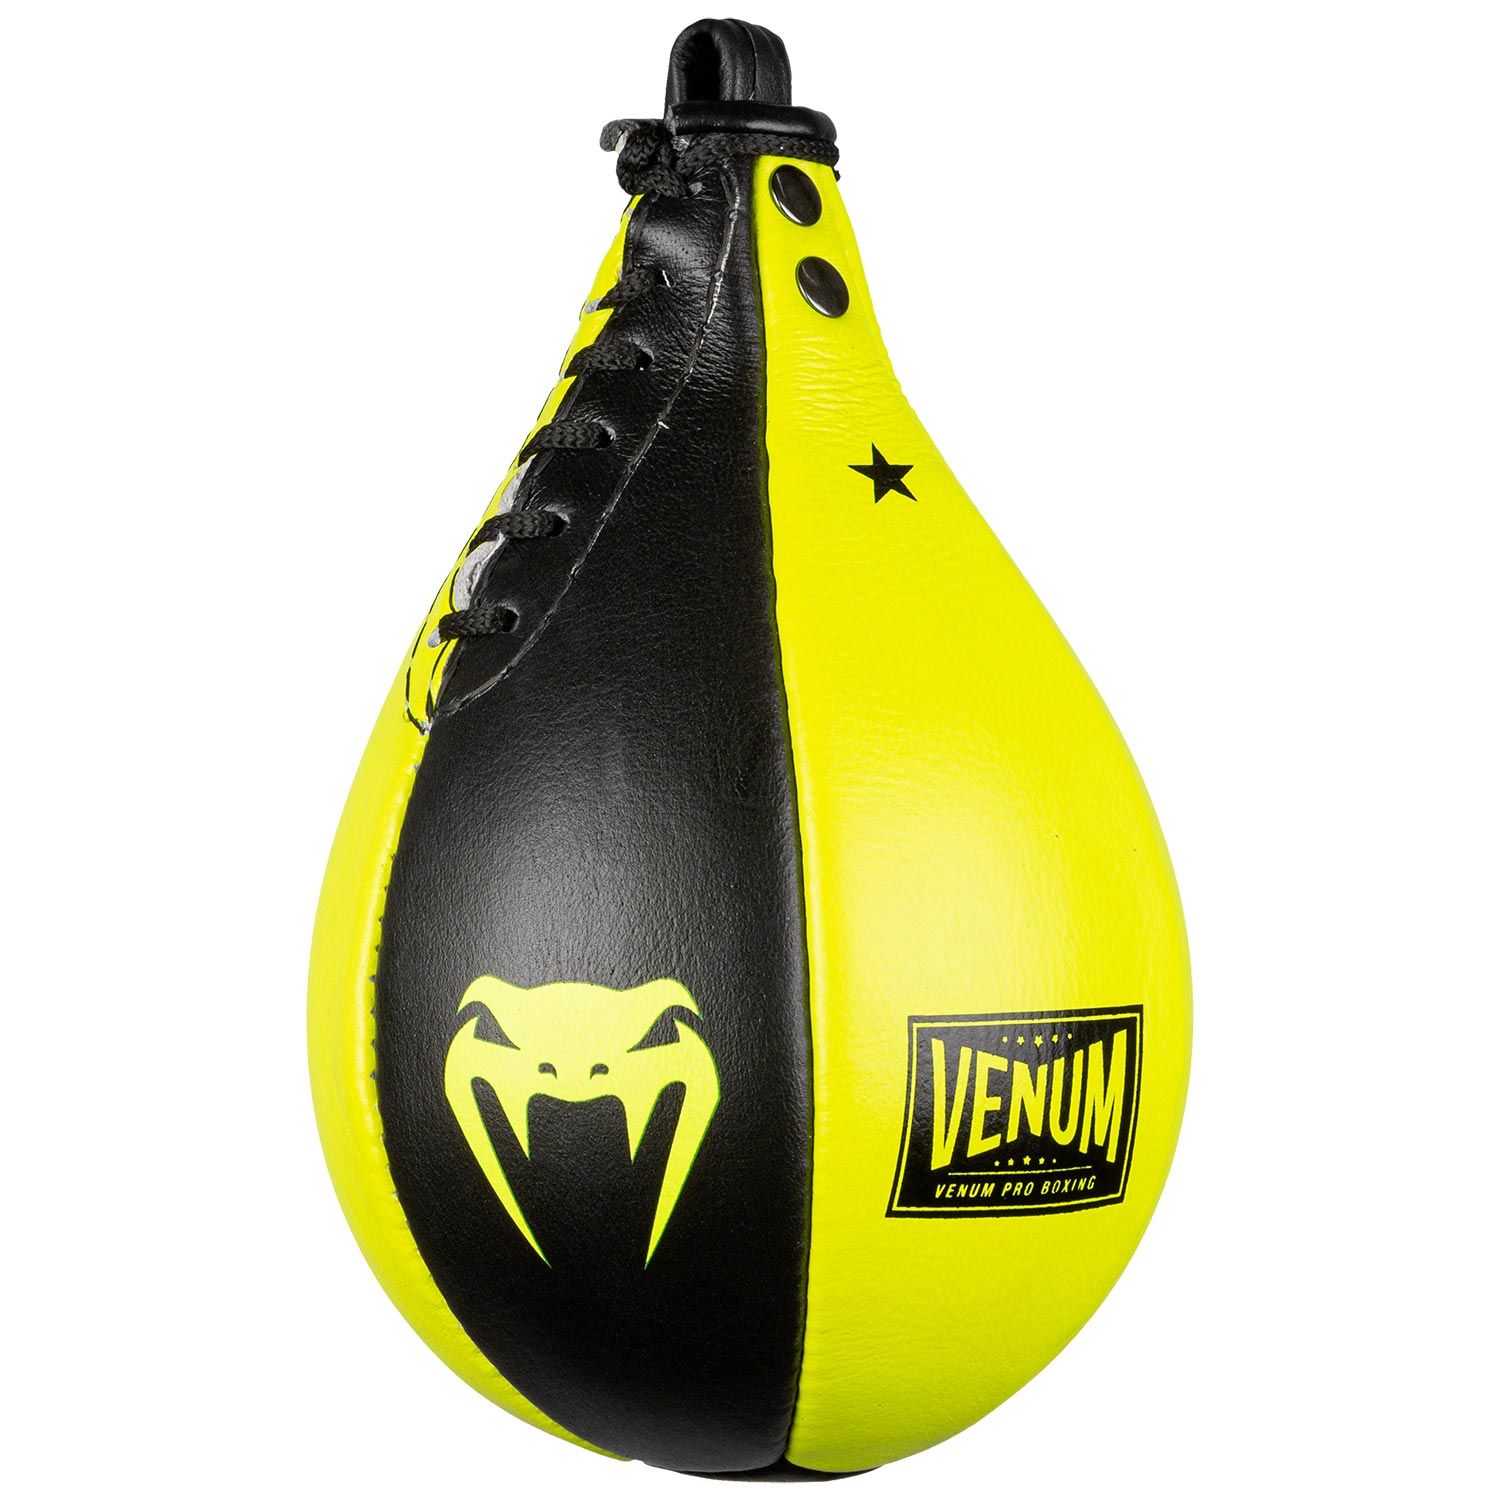 Venum Hurricane Speed Bag - Black/Yellow - www.strongerinc.org Europe